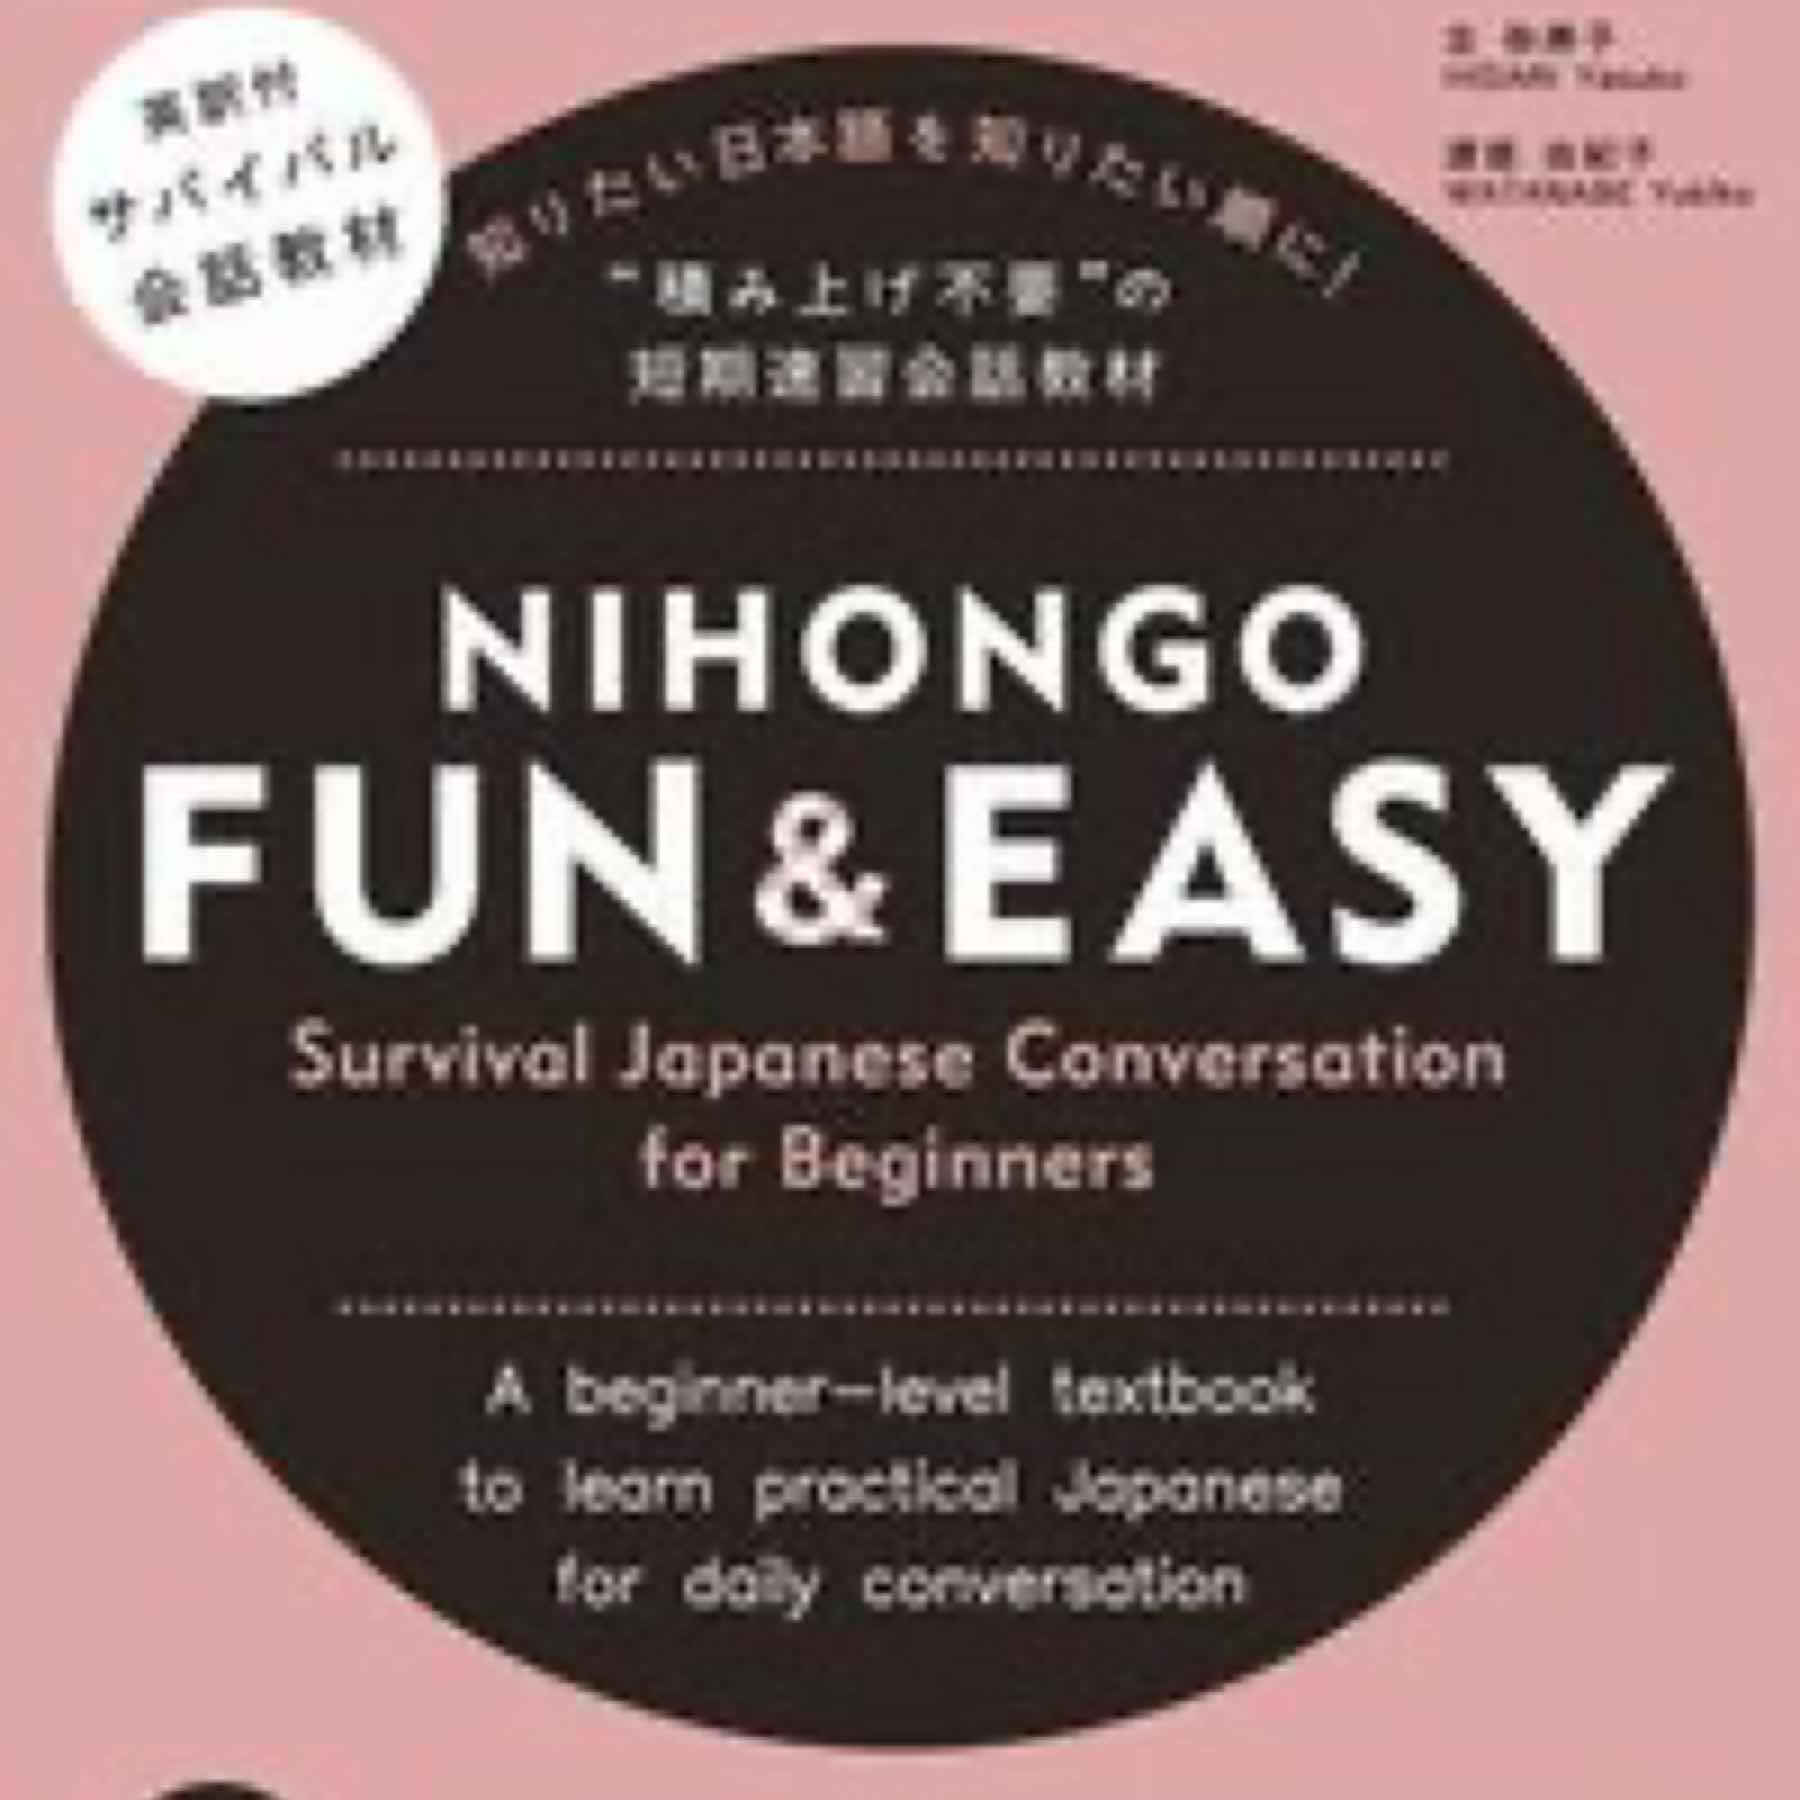 Nihongo fun & easy : survival Japanese conversation for beginners